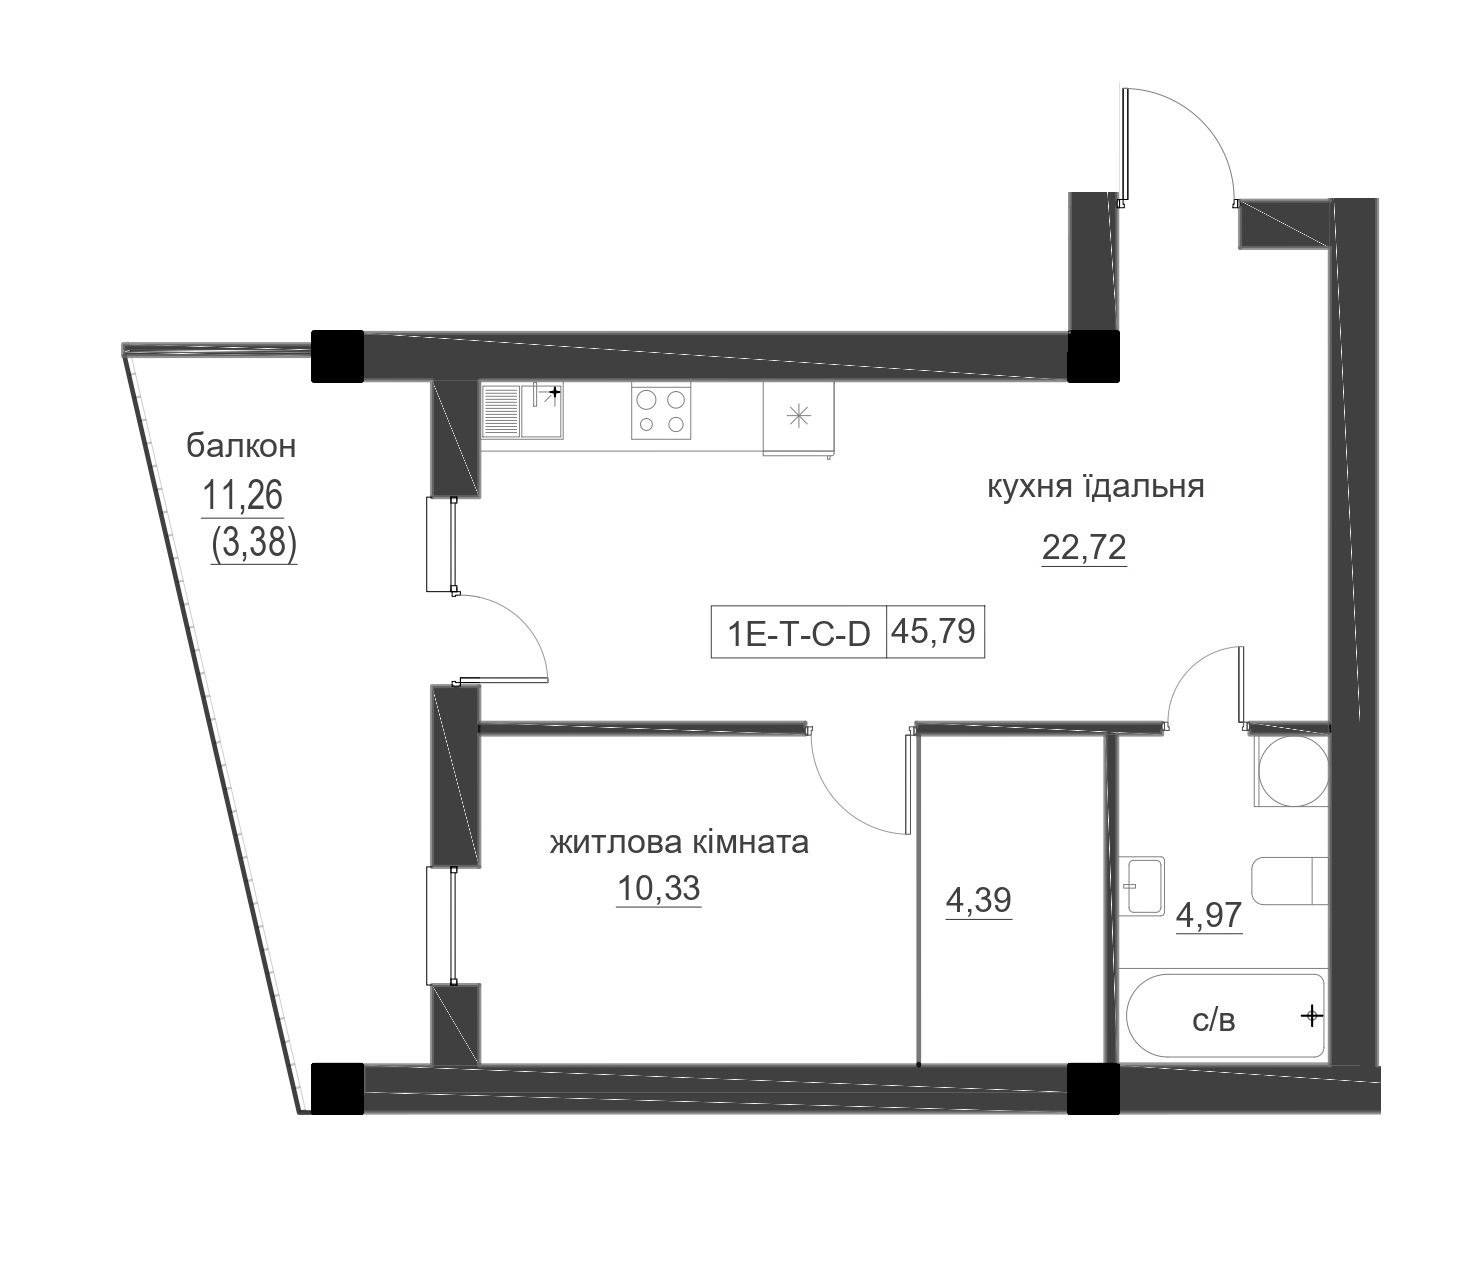 Planning 1-rm flats area 45.79m2, LR-005-03/0004.